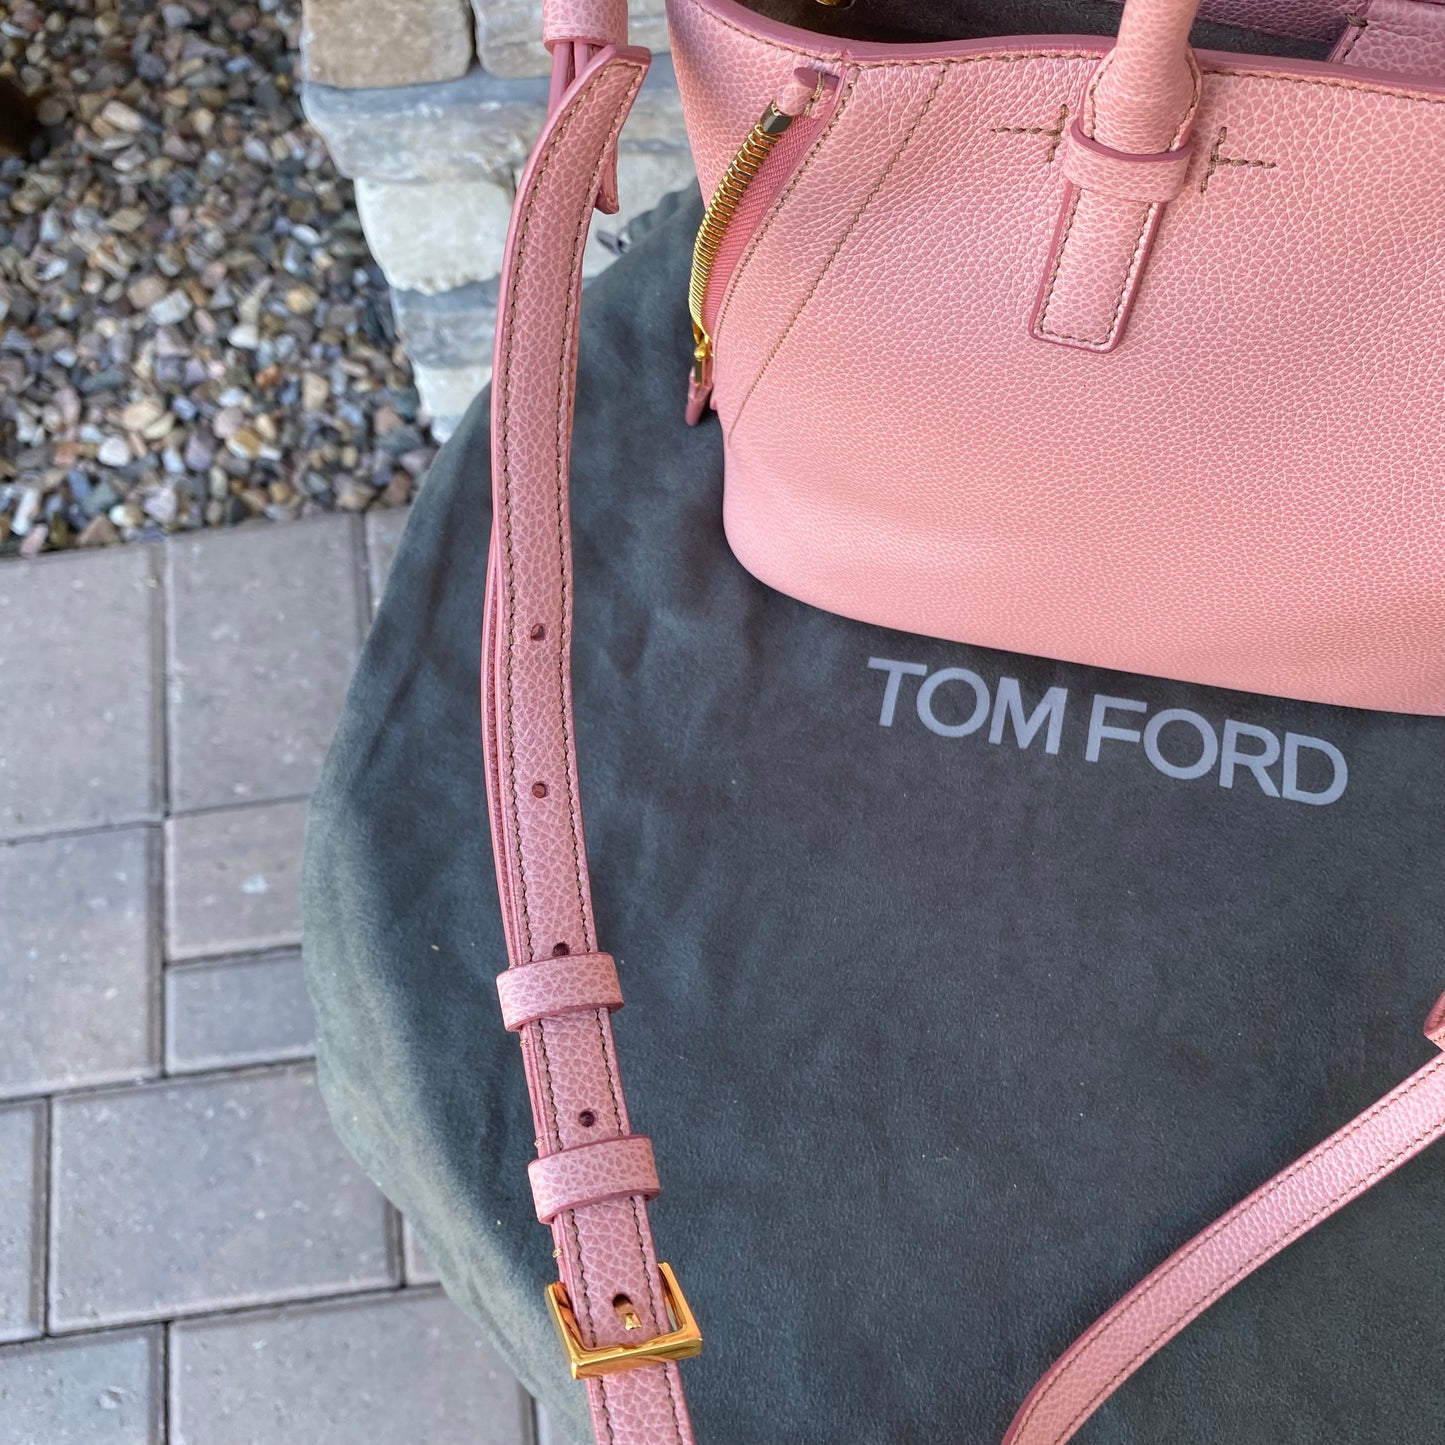 Tom Ford Jennifer Small Trap Calfskin Tote Bag